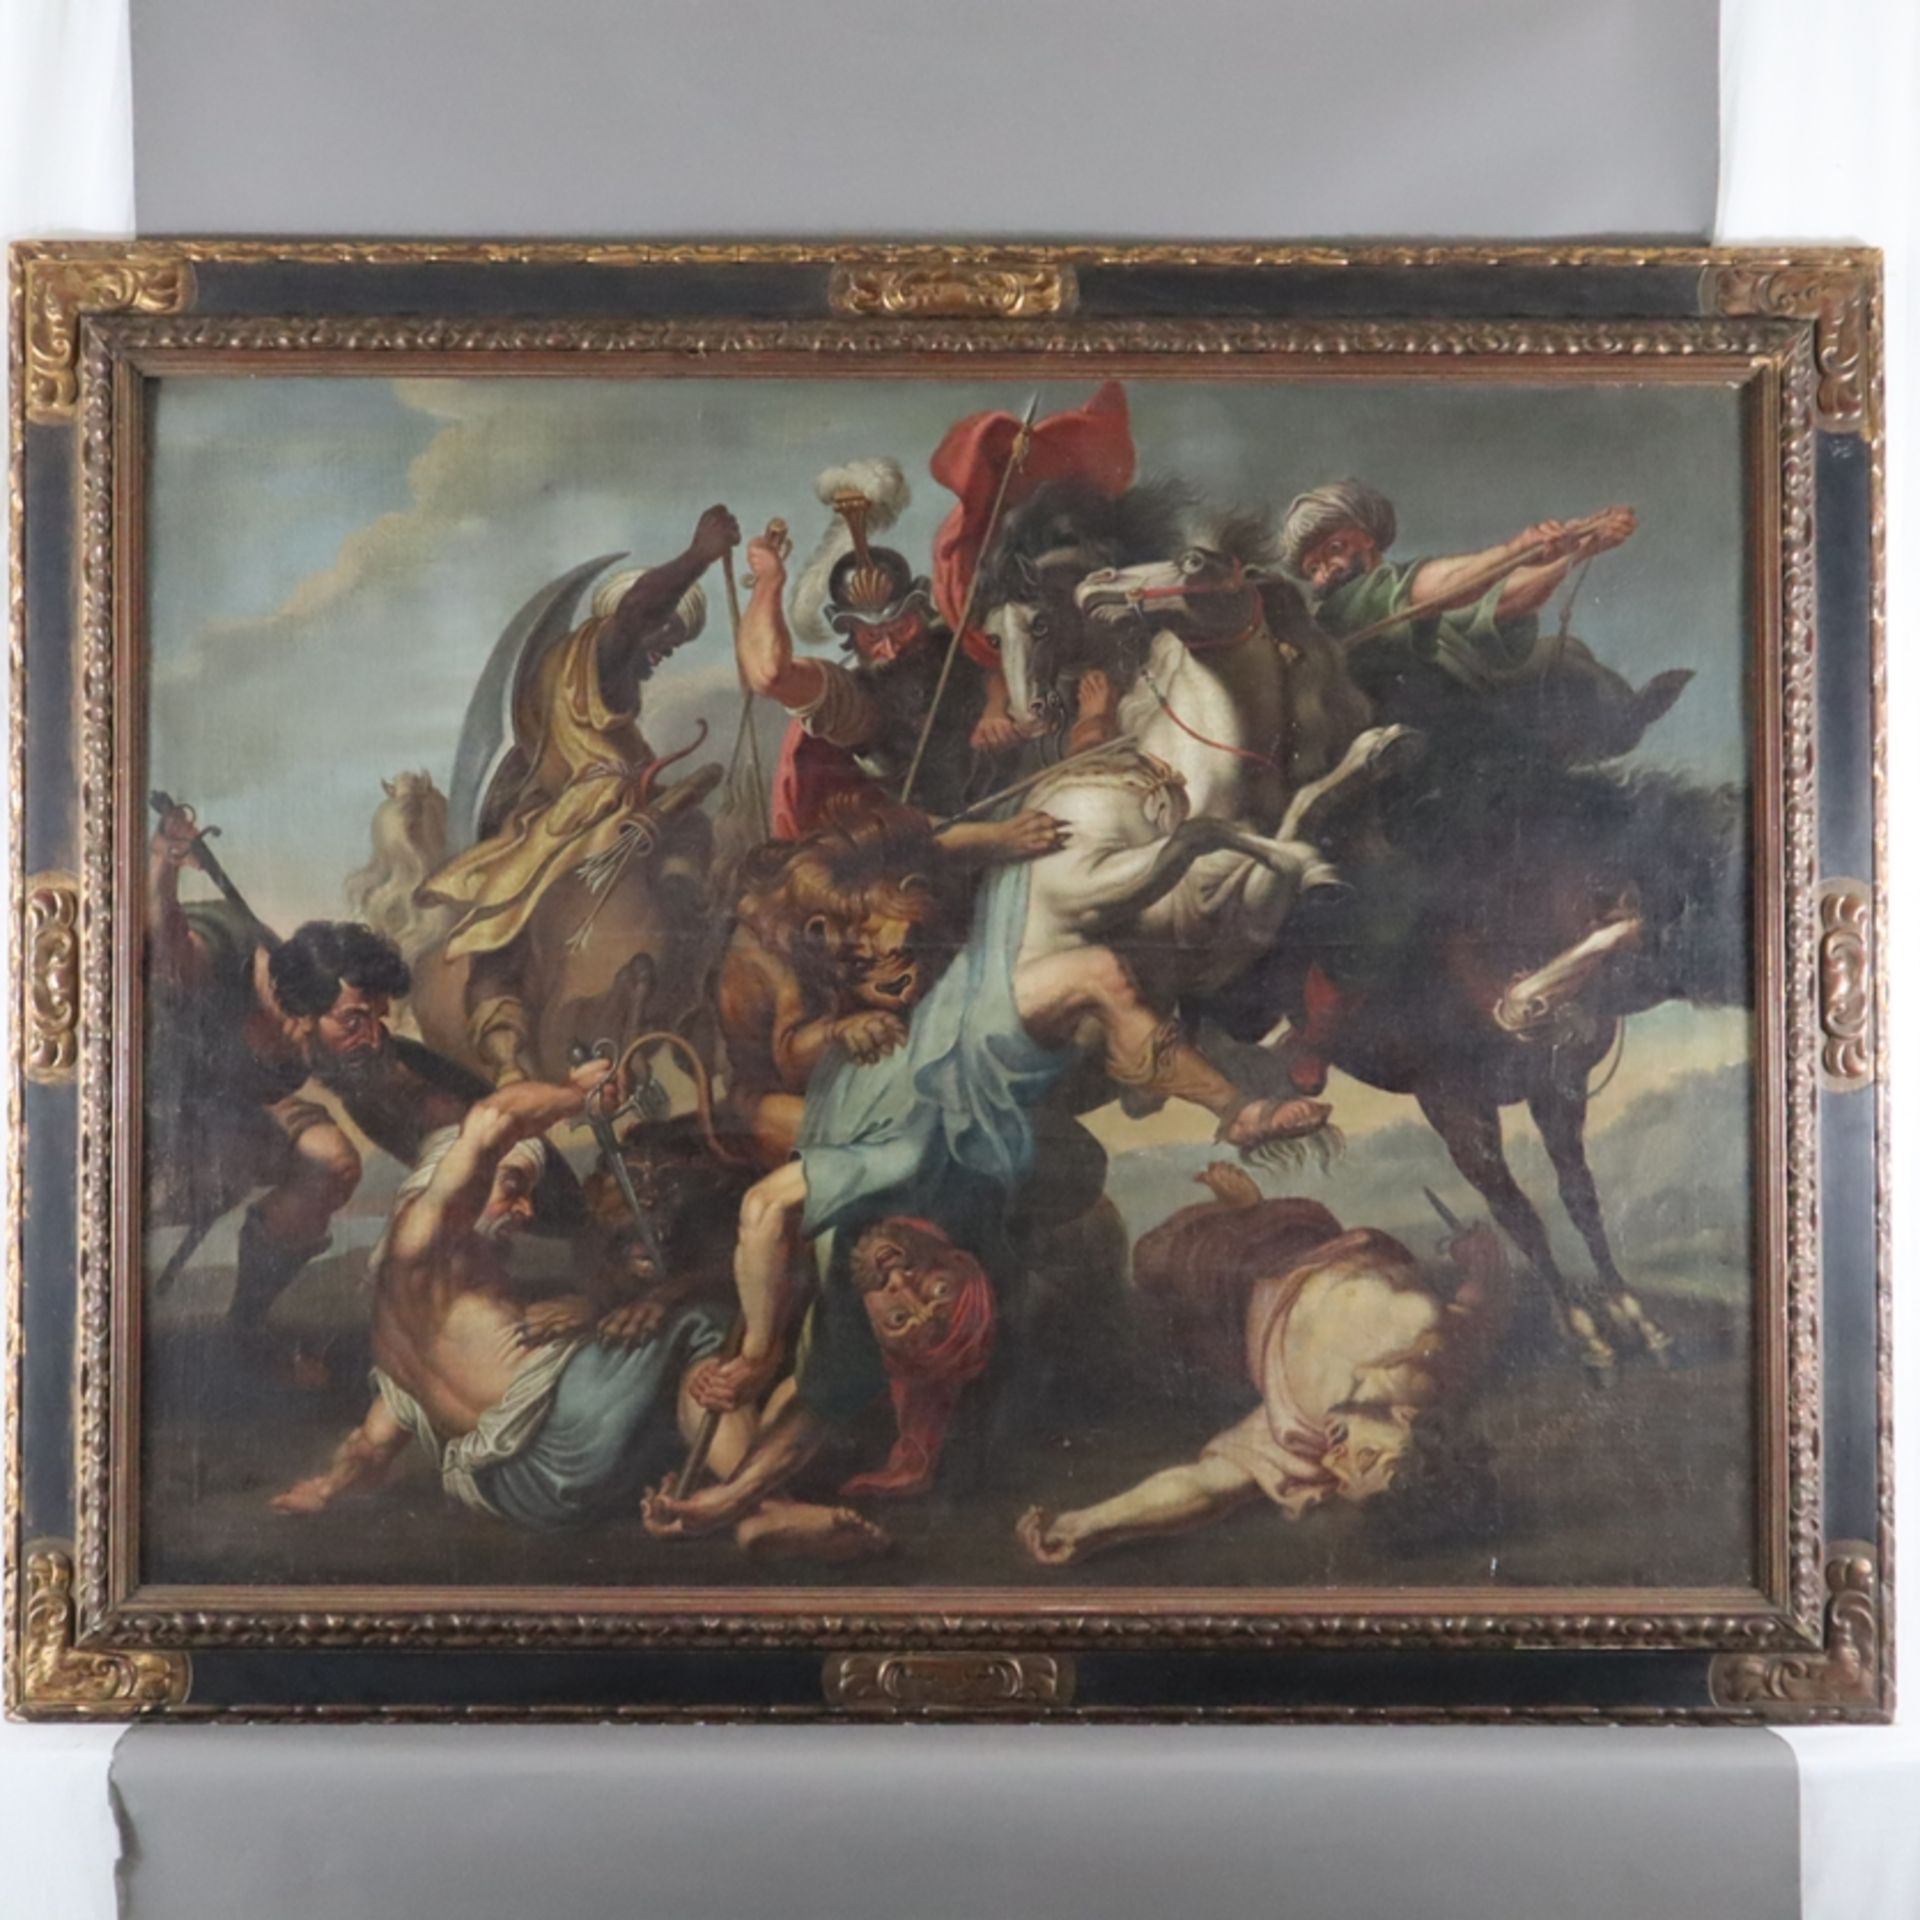 Jagdmaler/Kopist -18./19.Jh.- "Die Löwenjagd", Öl auf Leinwand, Kopie des großformatigen barocken J - Image 19 of 19